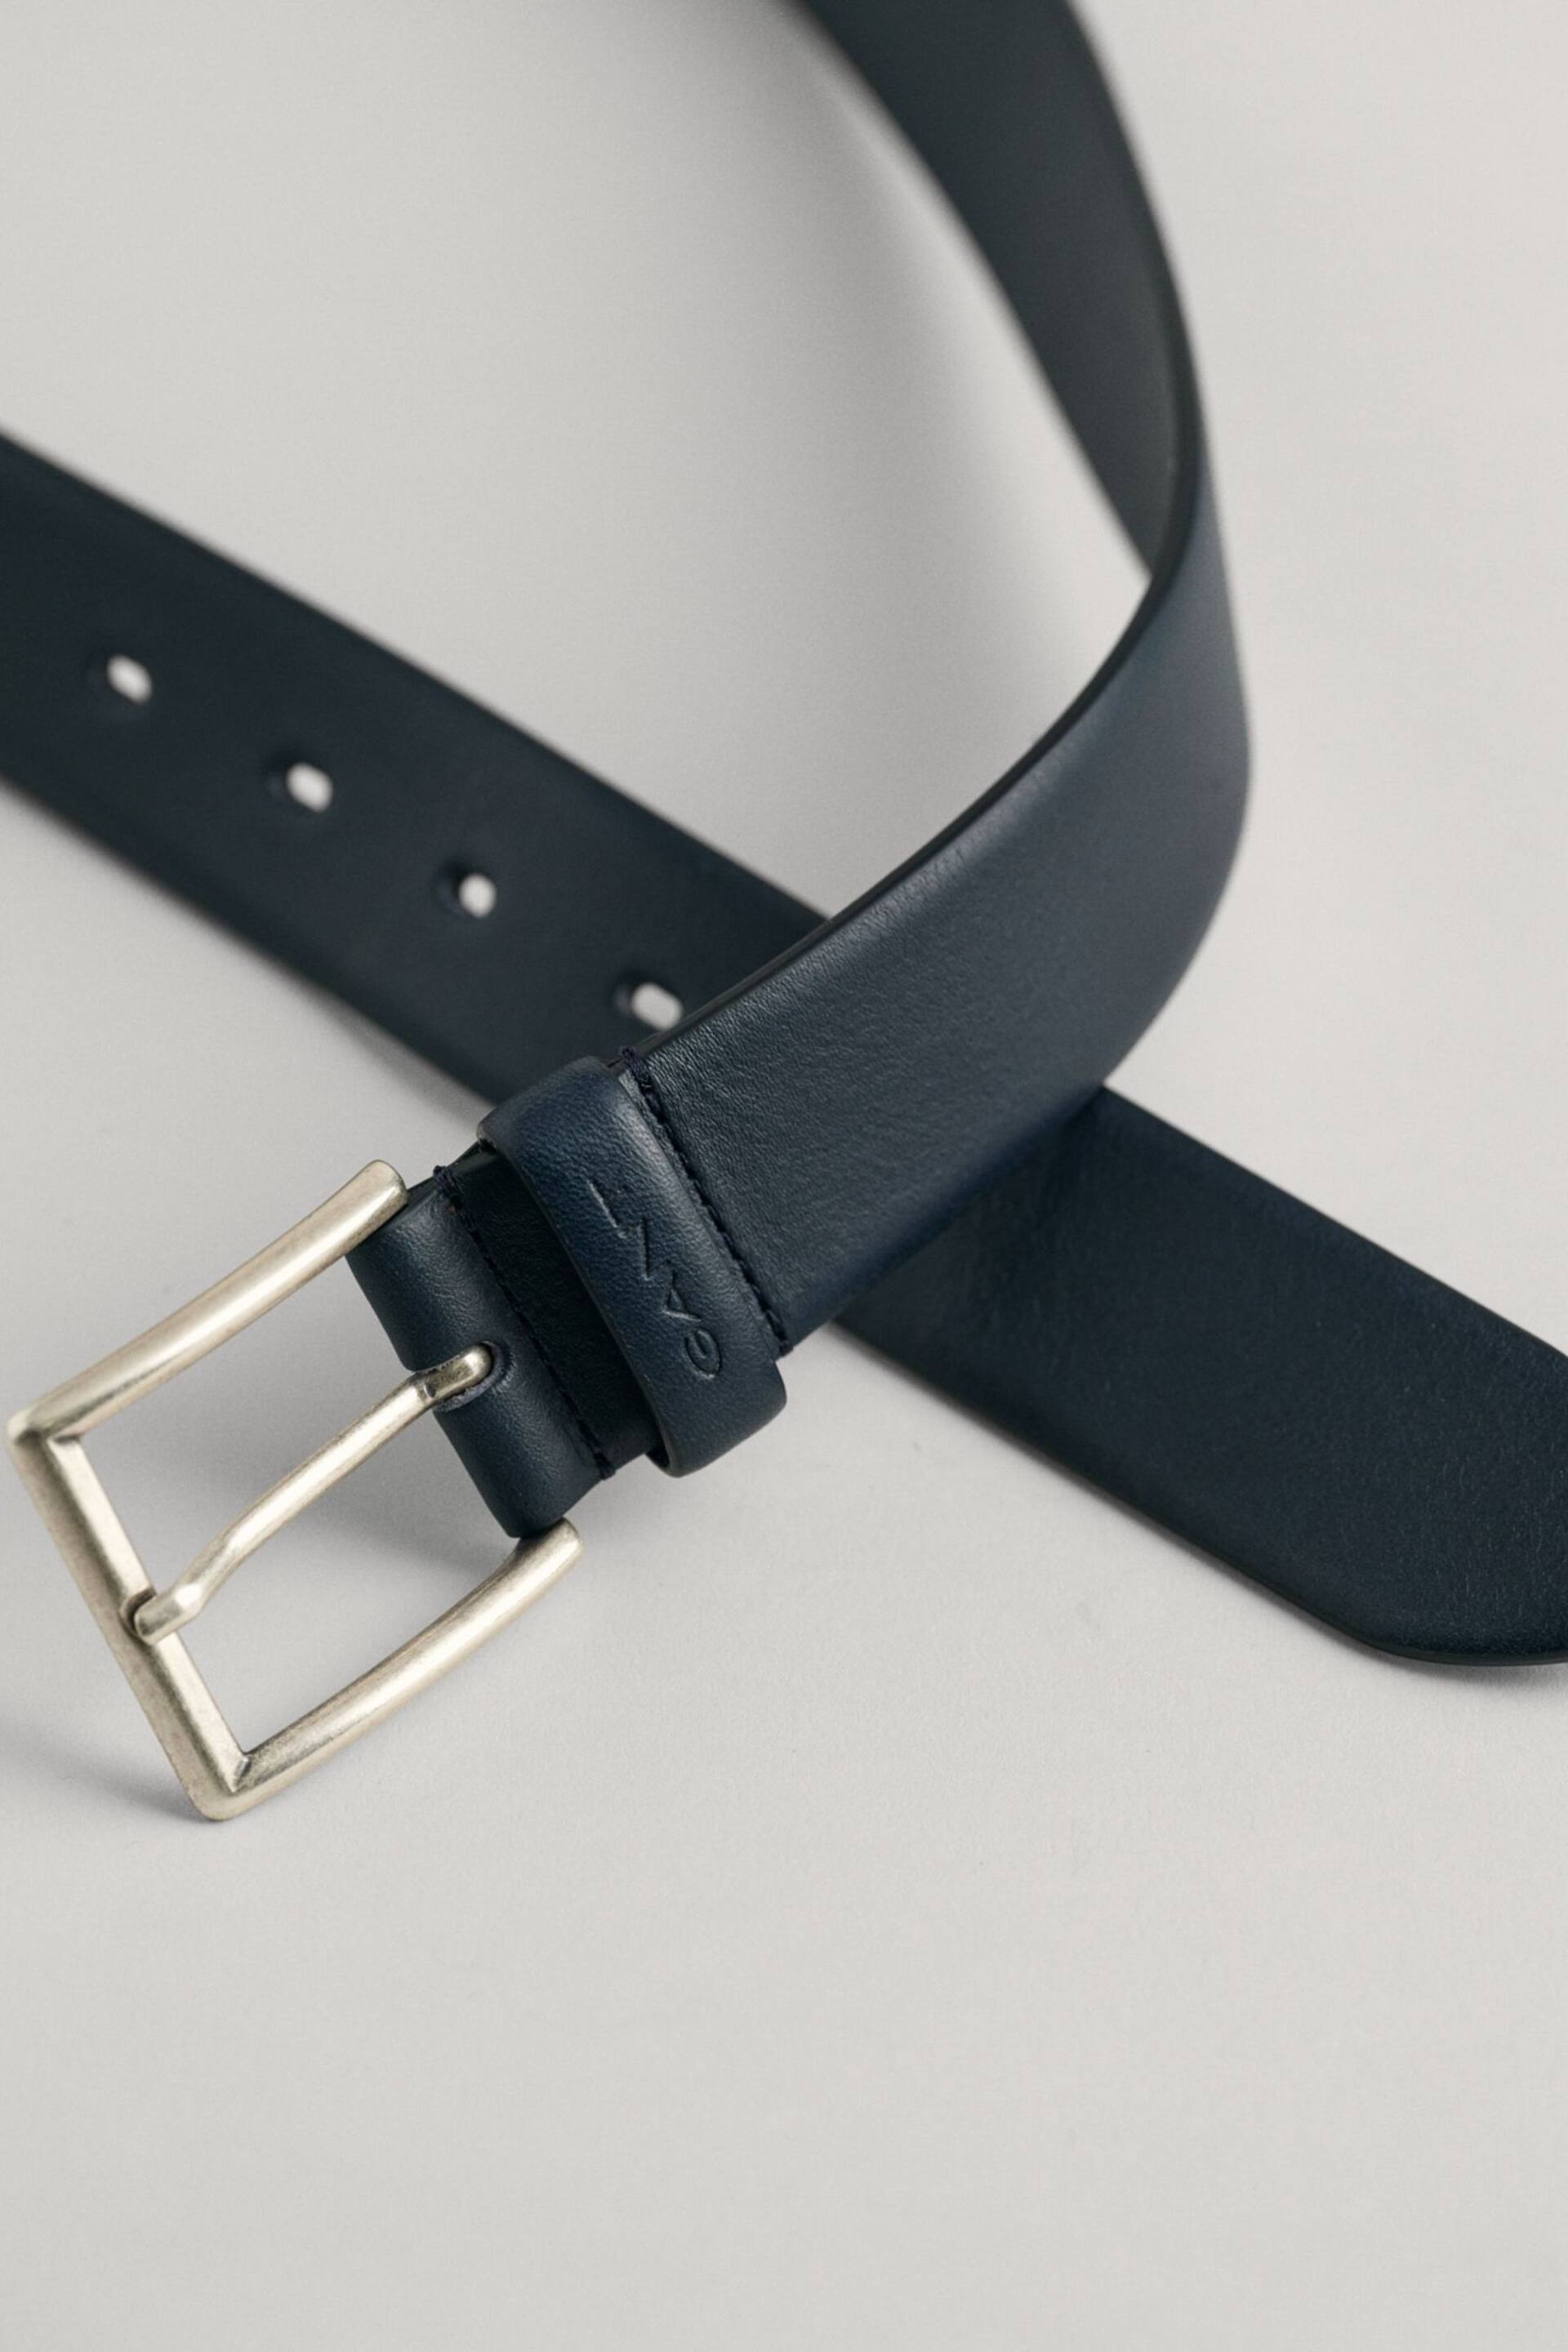 GANT Classic Leather Belt - Image 3 of 4